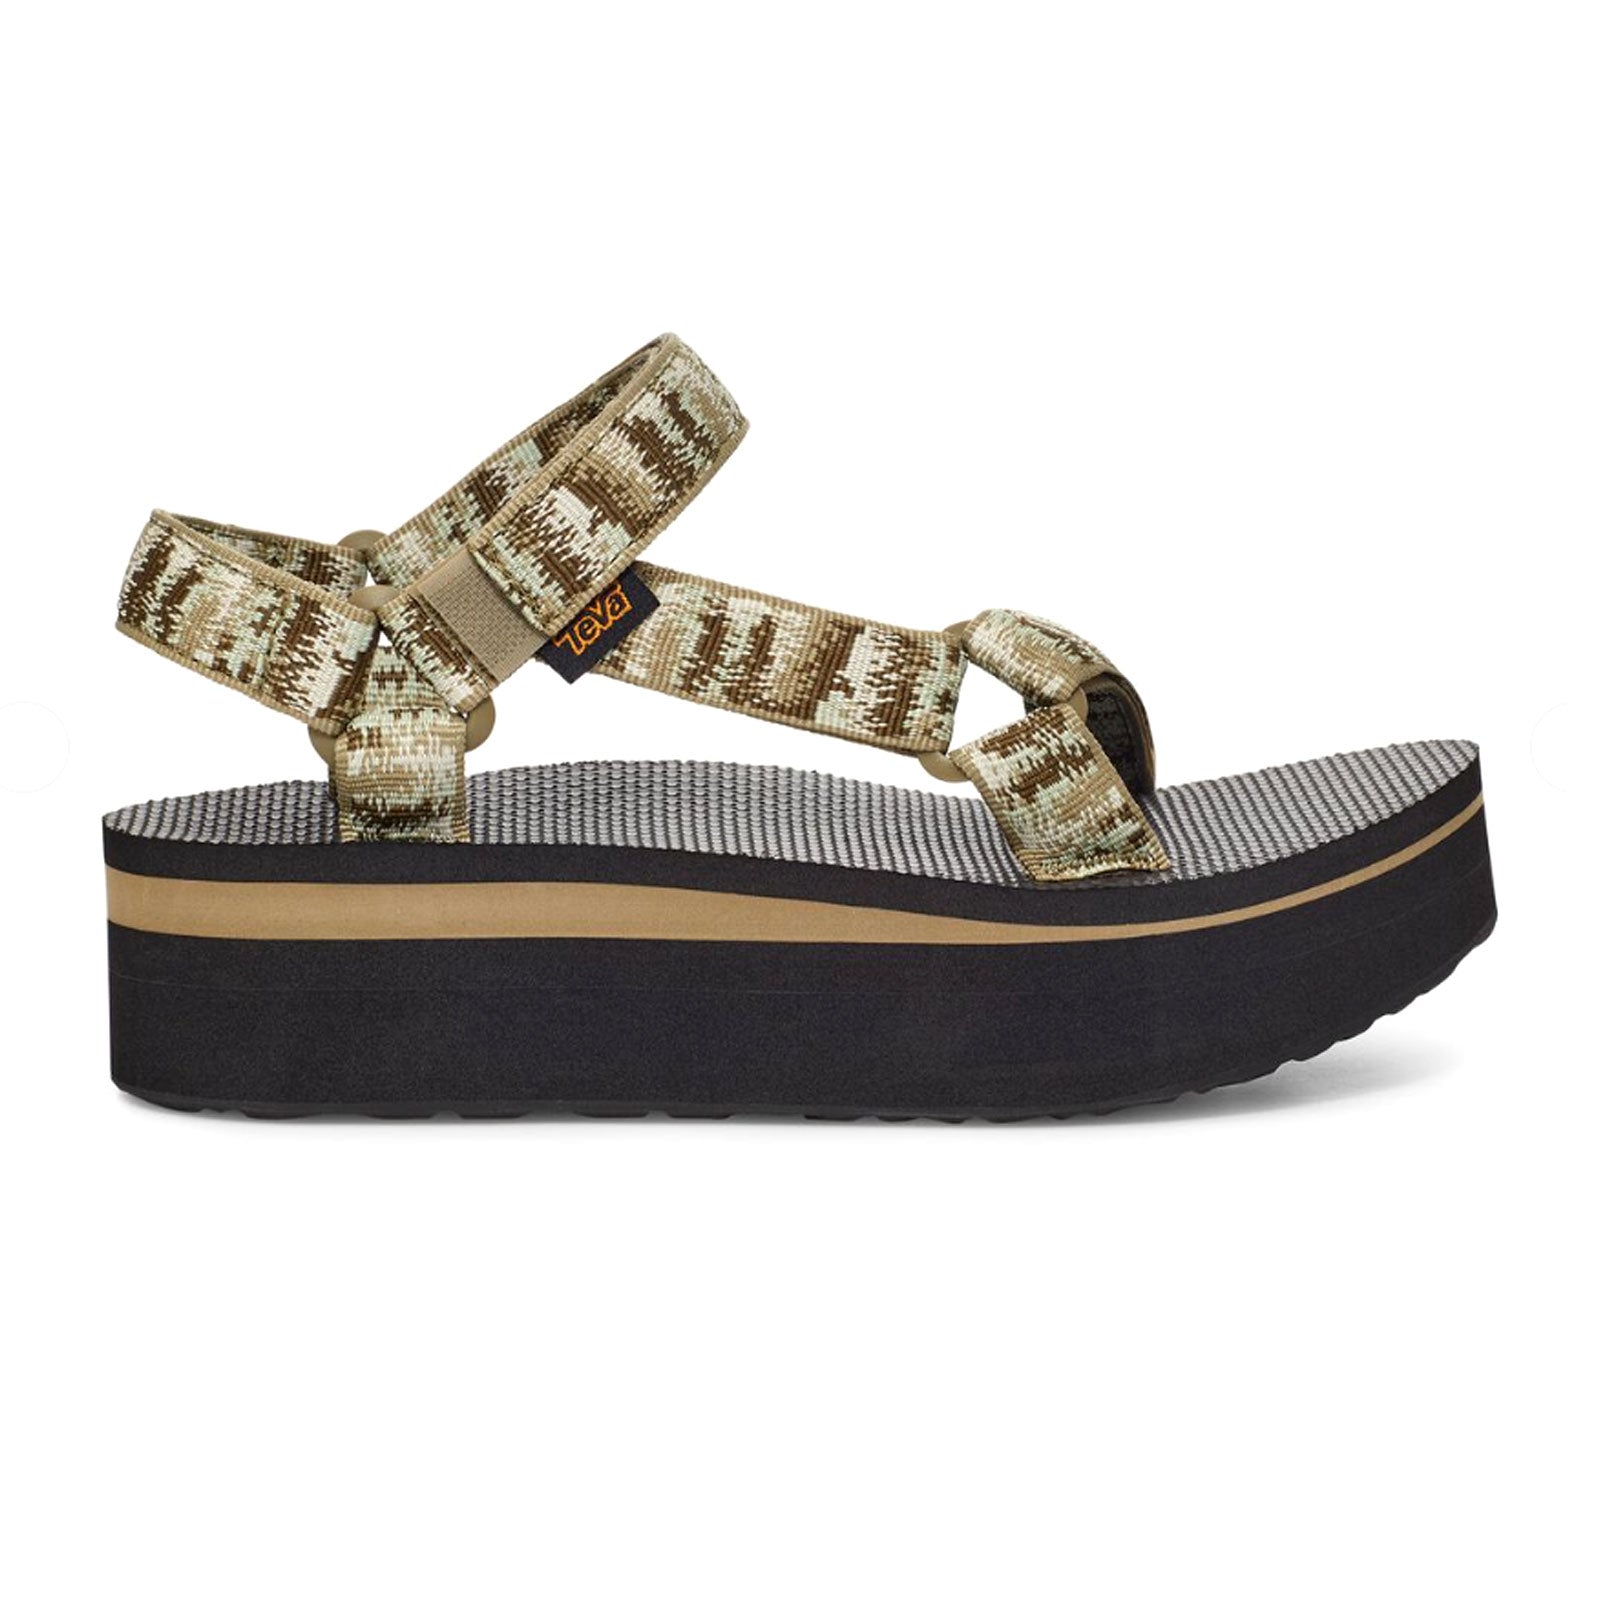 Teva Flatform Universal (Women) - Iridescence Olive Sandals - Backstrap - The Heel Shoe Fitters